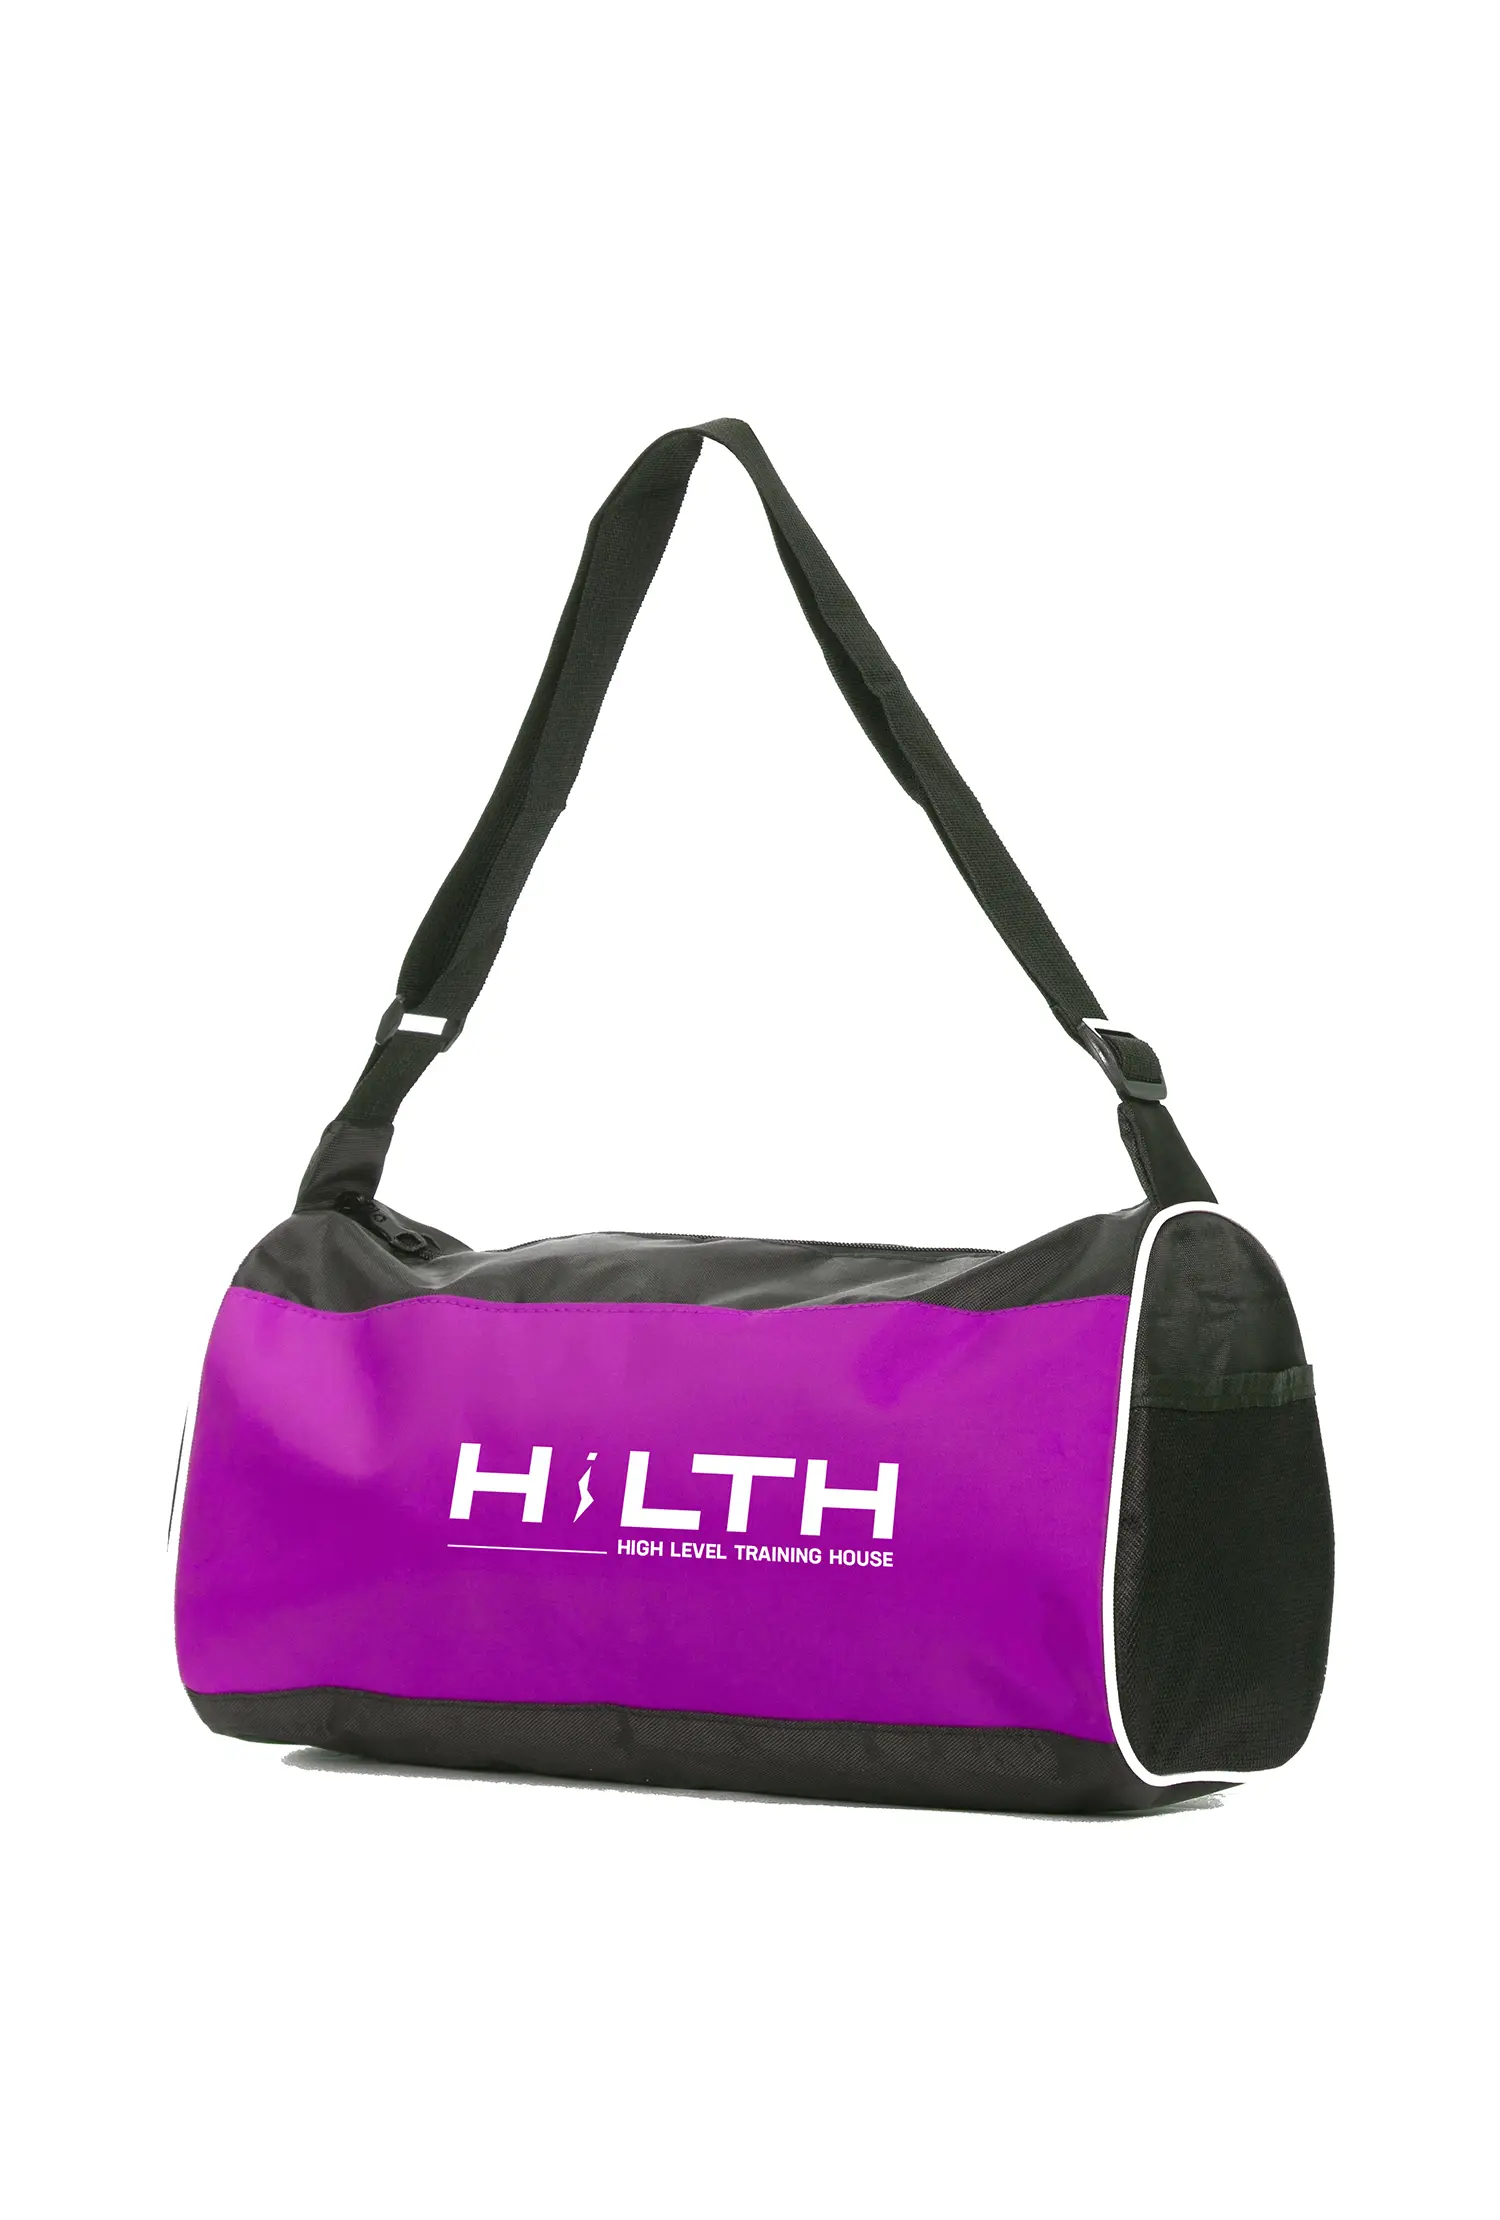 Hilth personal training full branding 3